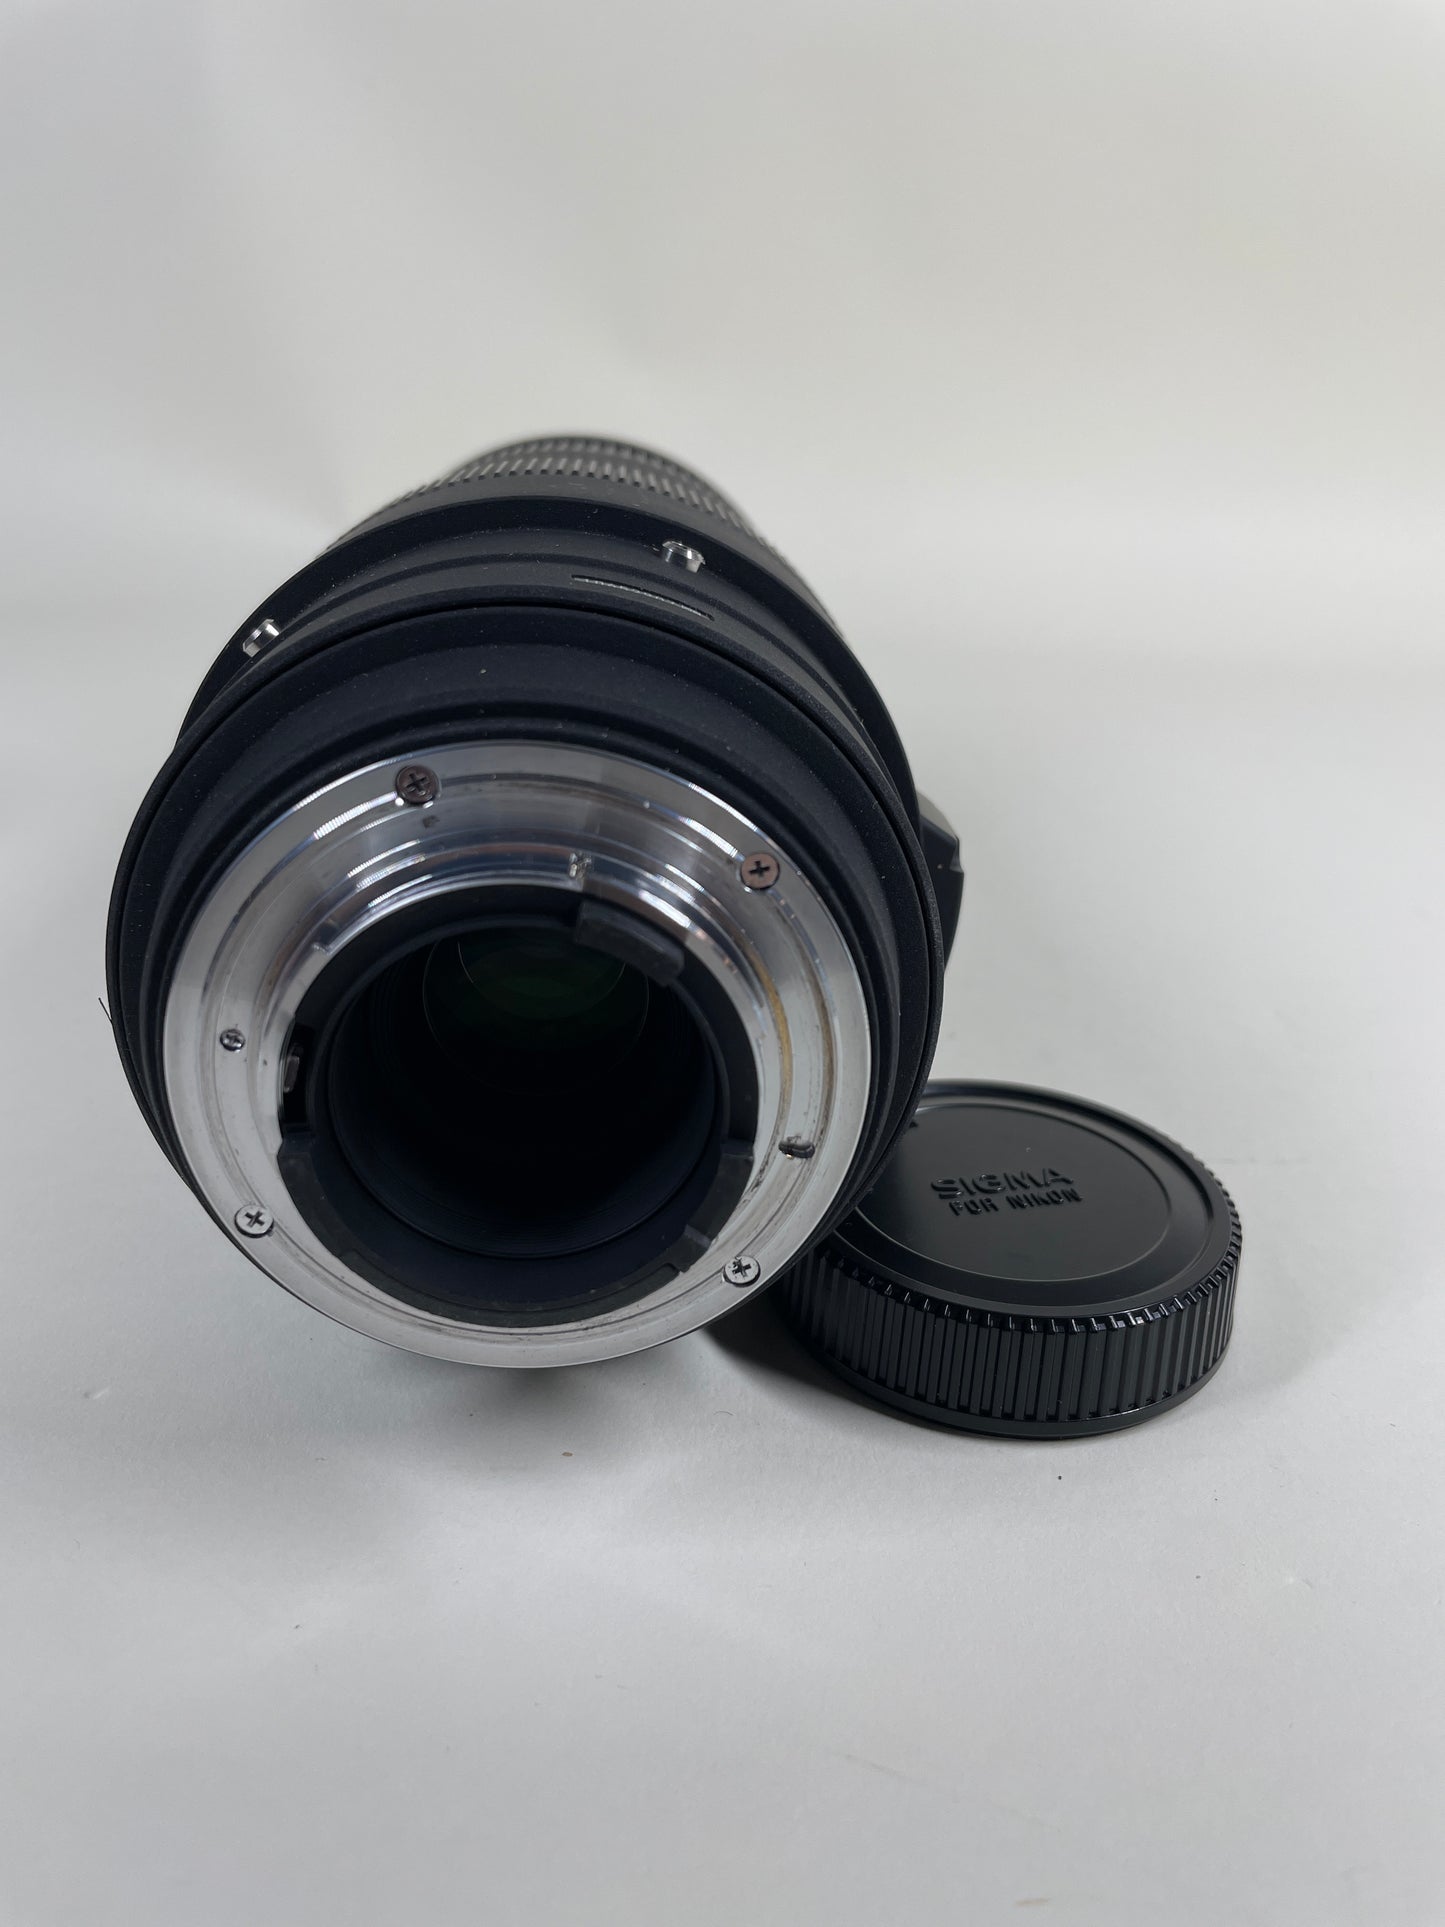 Sigma DG 120-400mm f/4.5-5.6 For Nikon F Mount